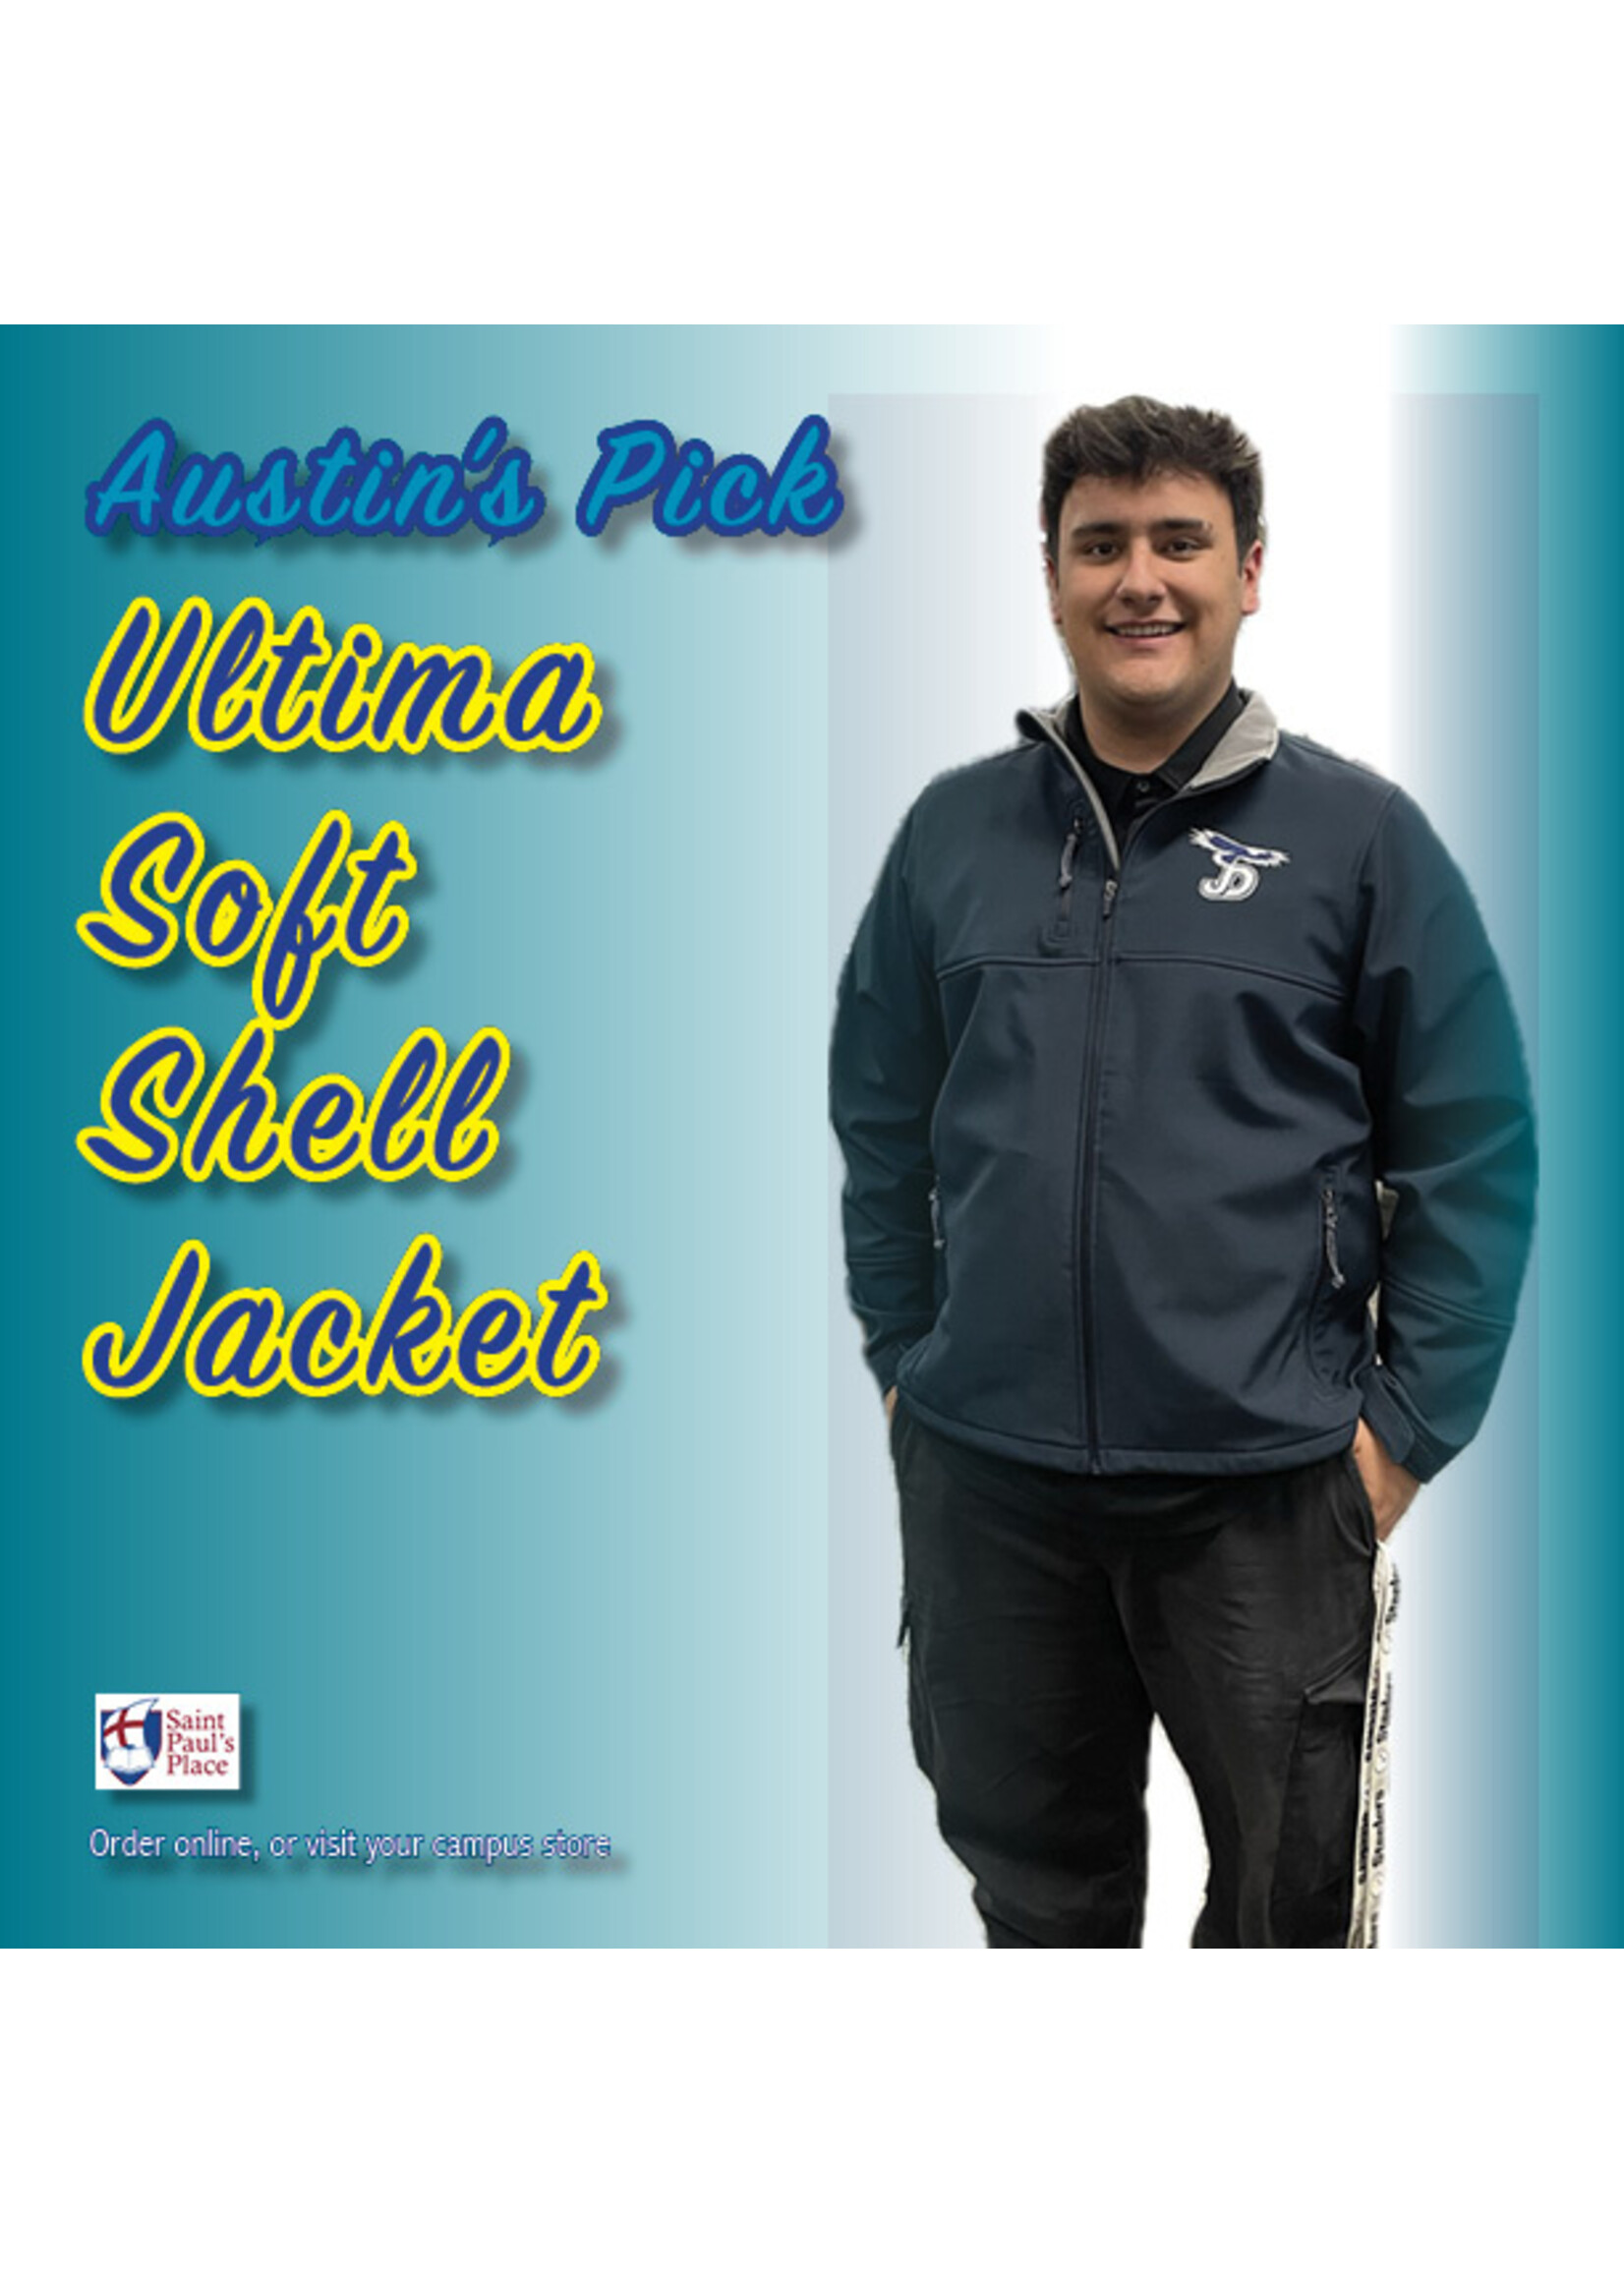 NON-UNIFORM JACKET -  Ultima Soft Shell Jacket, custom